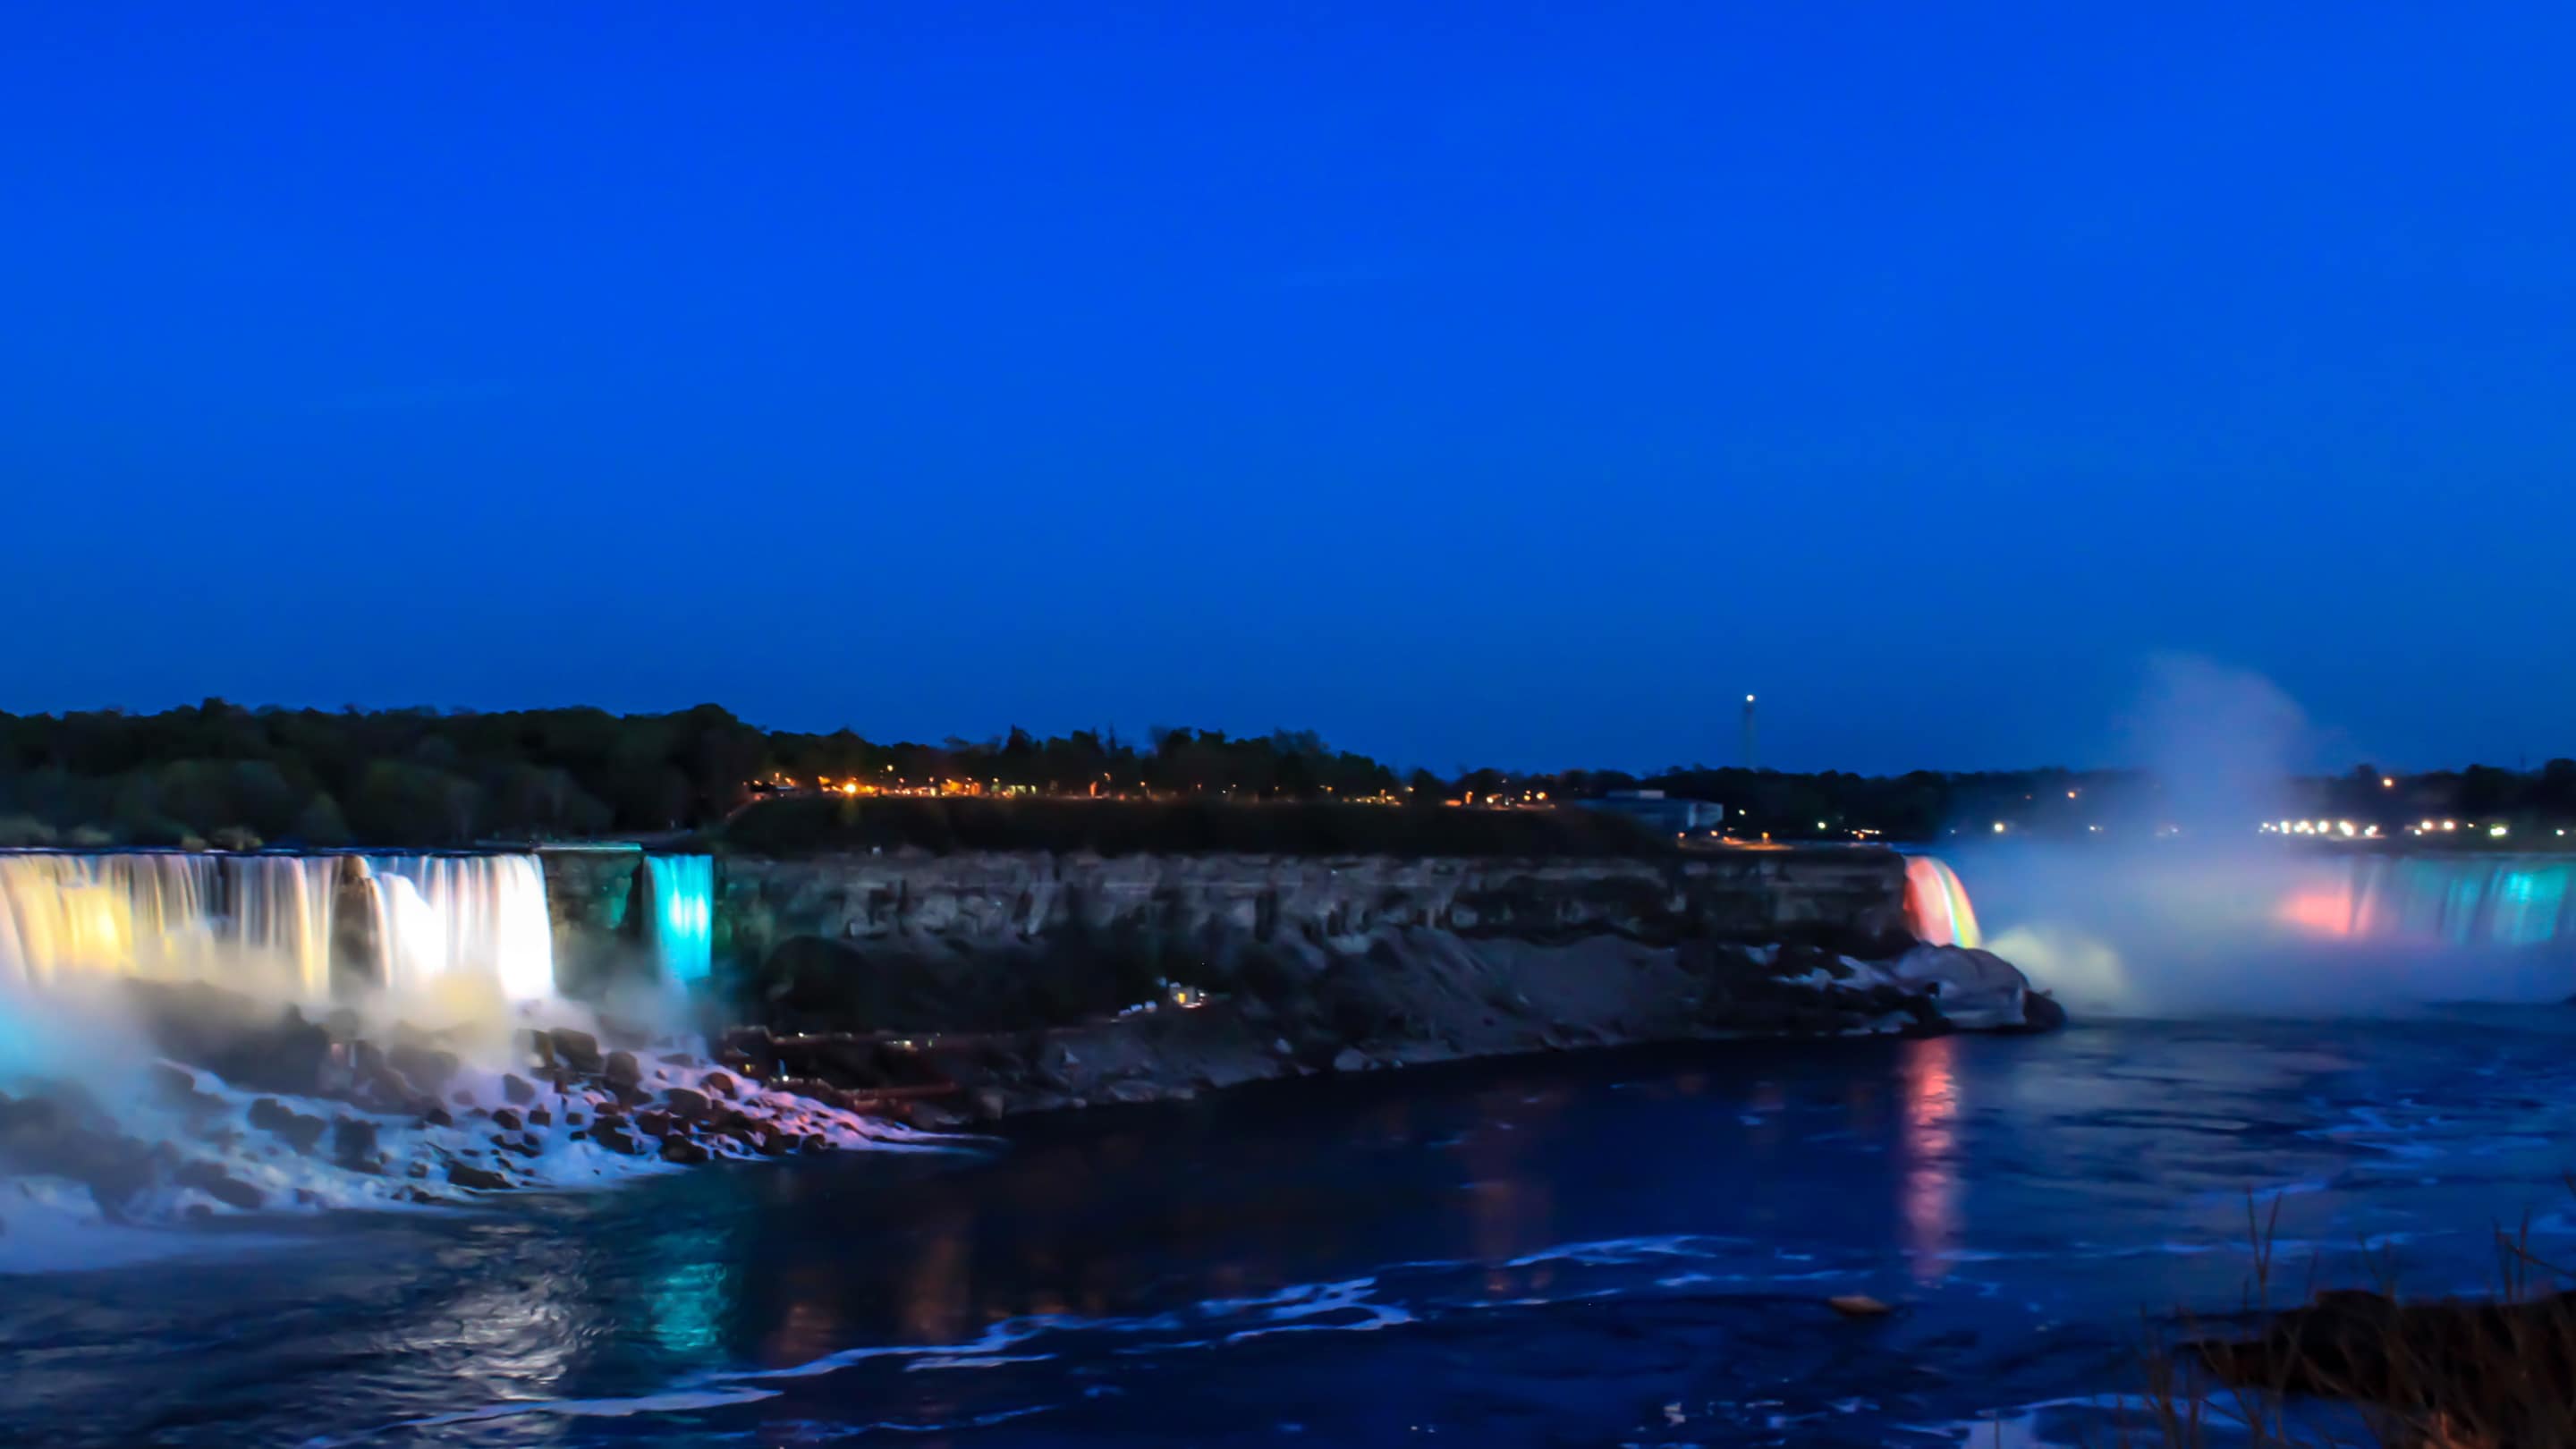 Niagara Falls lit up at night.